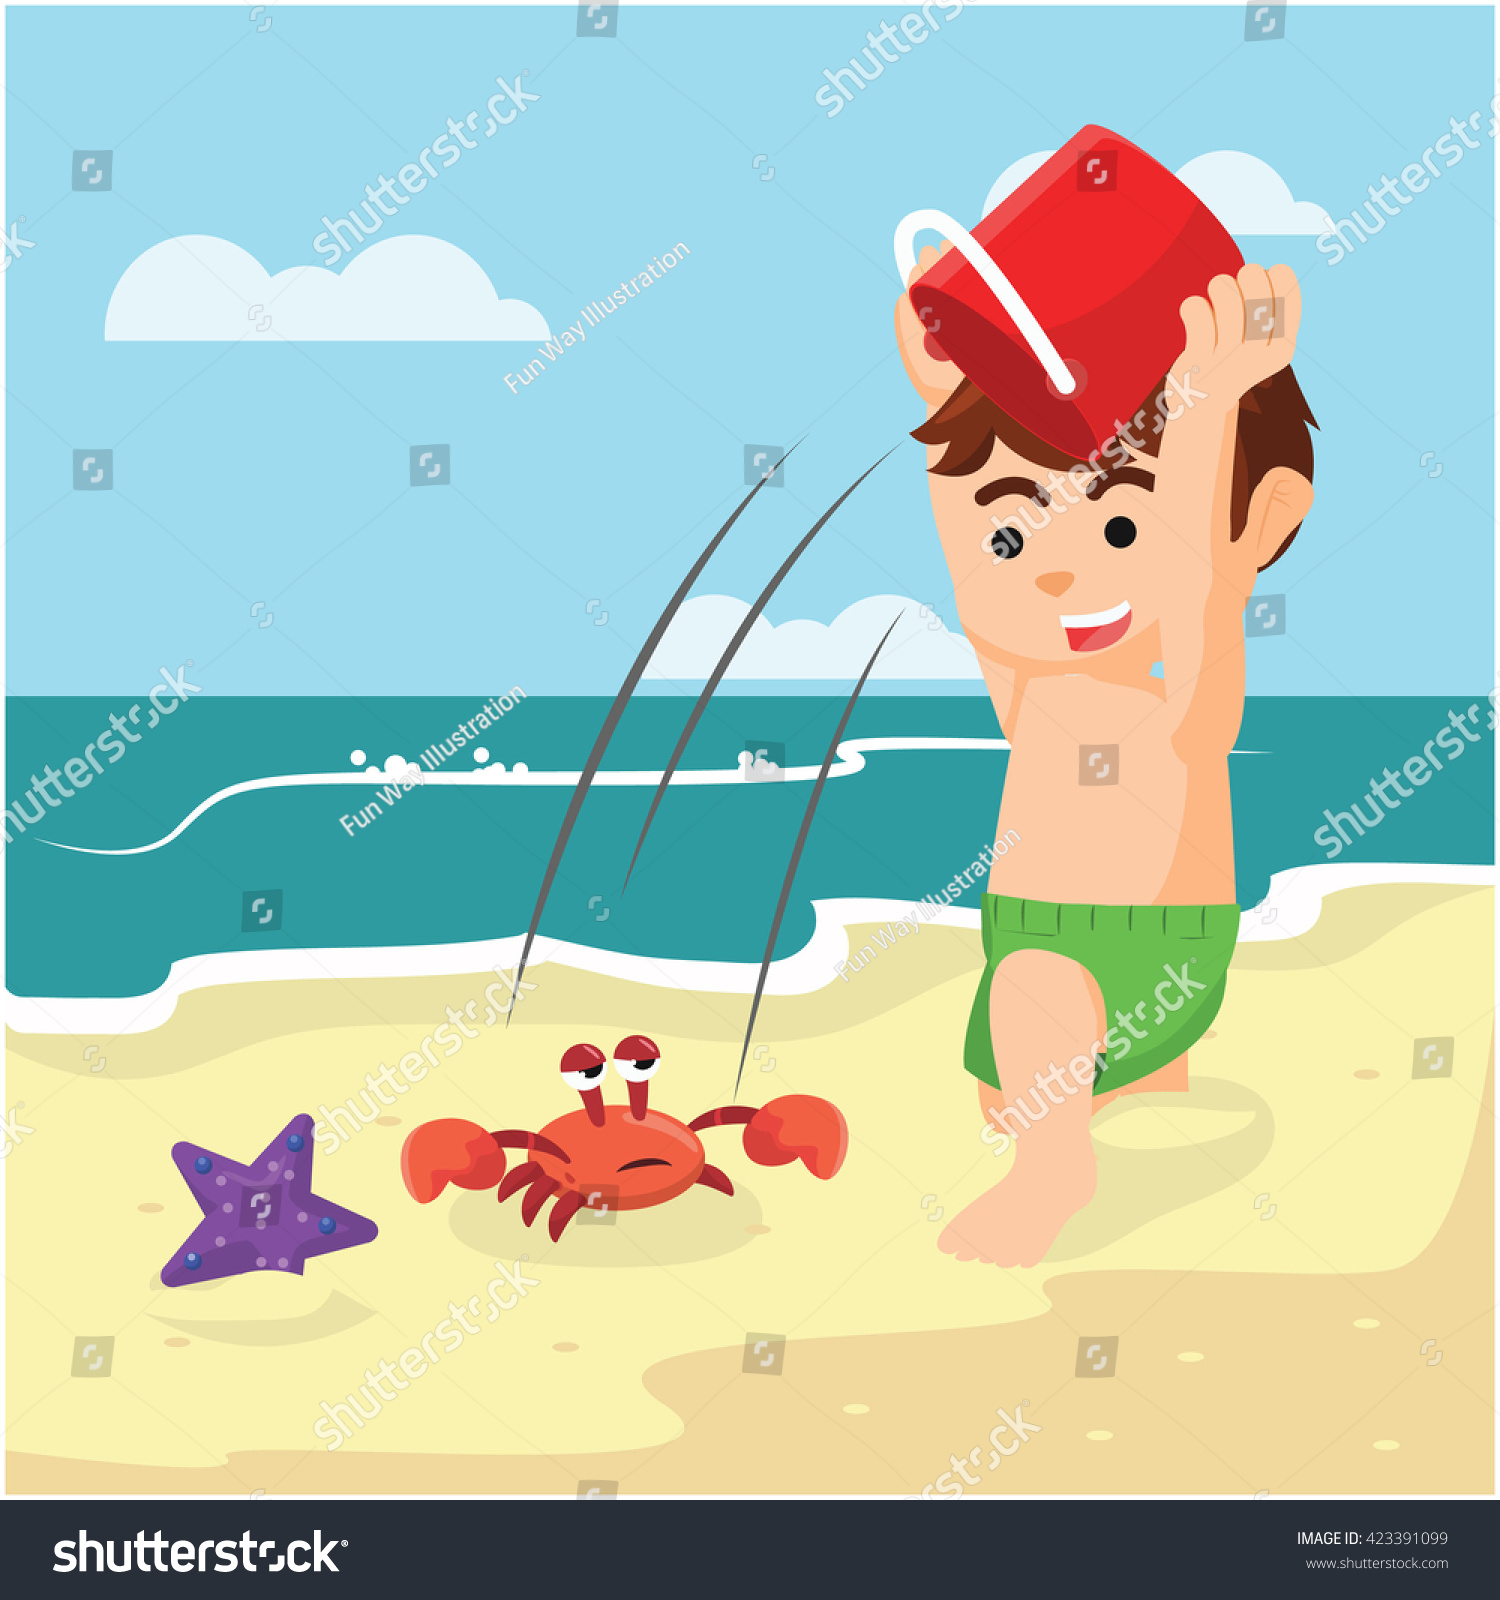 SVG of boy catching crab in beach svg